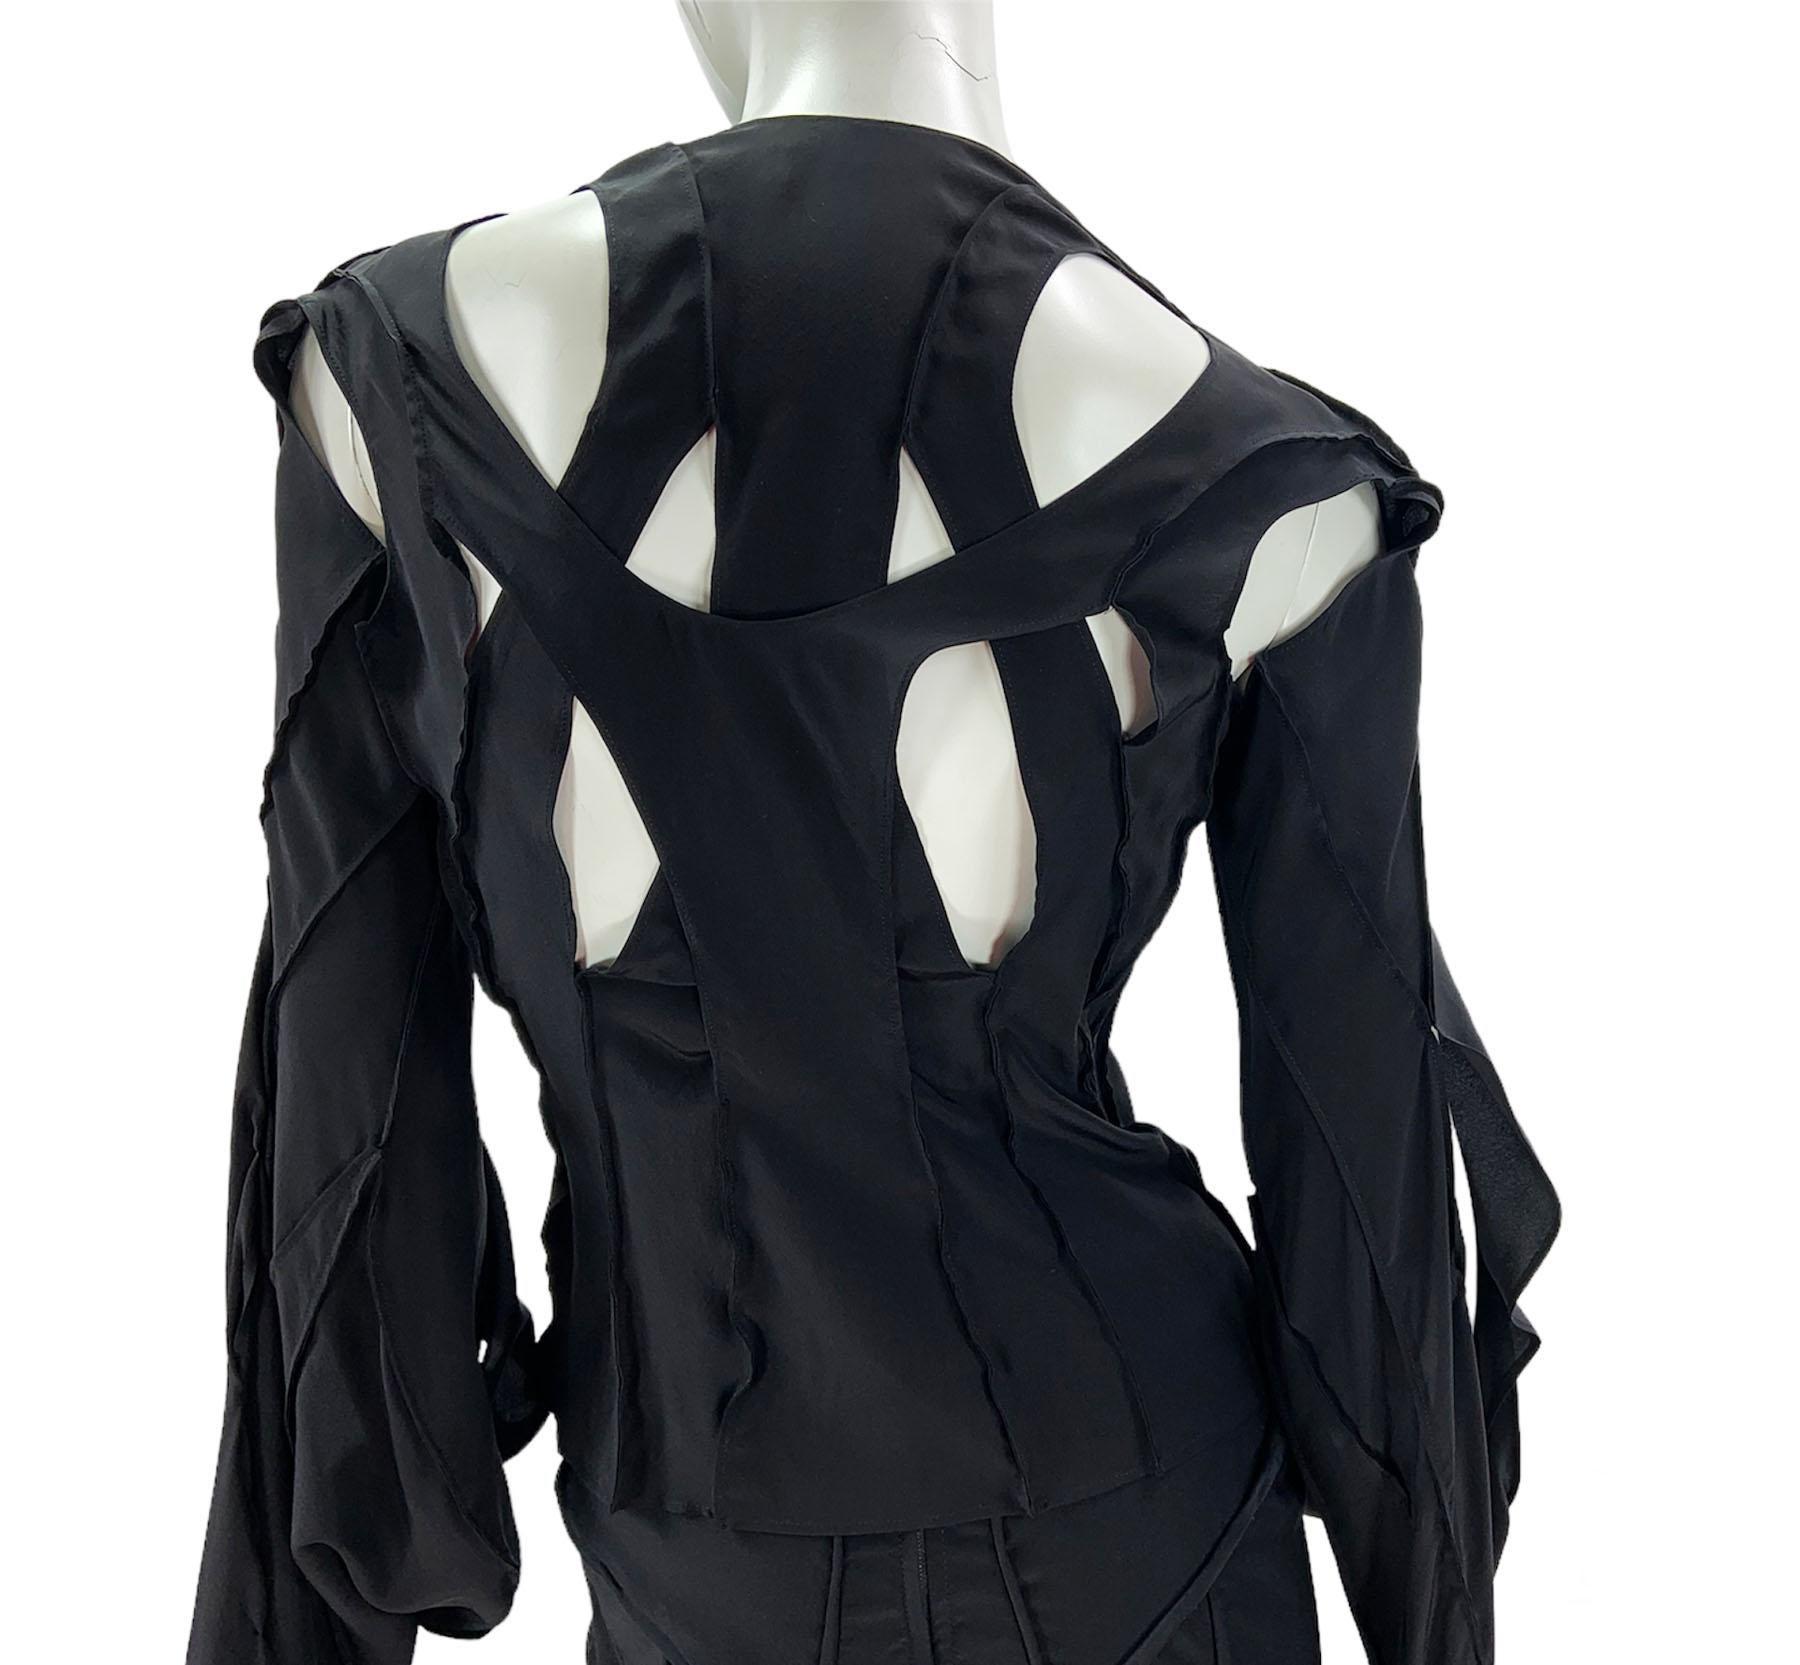 Tom Ford for Yves Saint Laurent S/S 2003 Silk Black Skirt Suit French 38 - US 6 For Sale 4